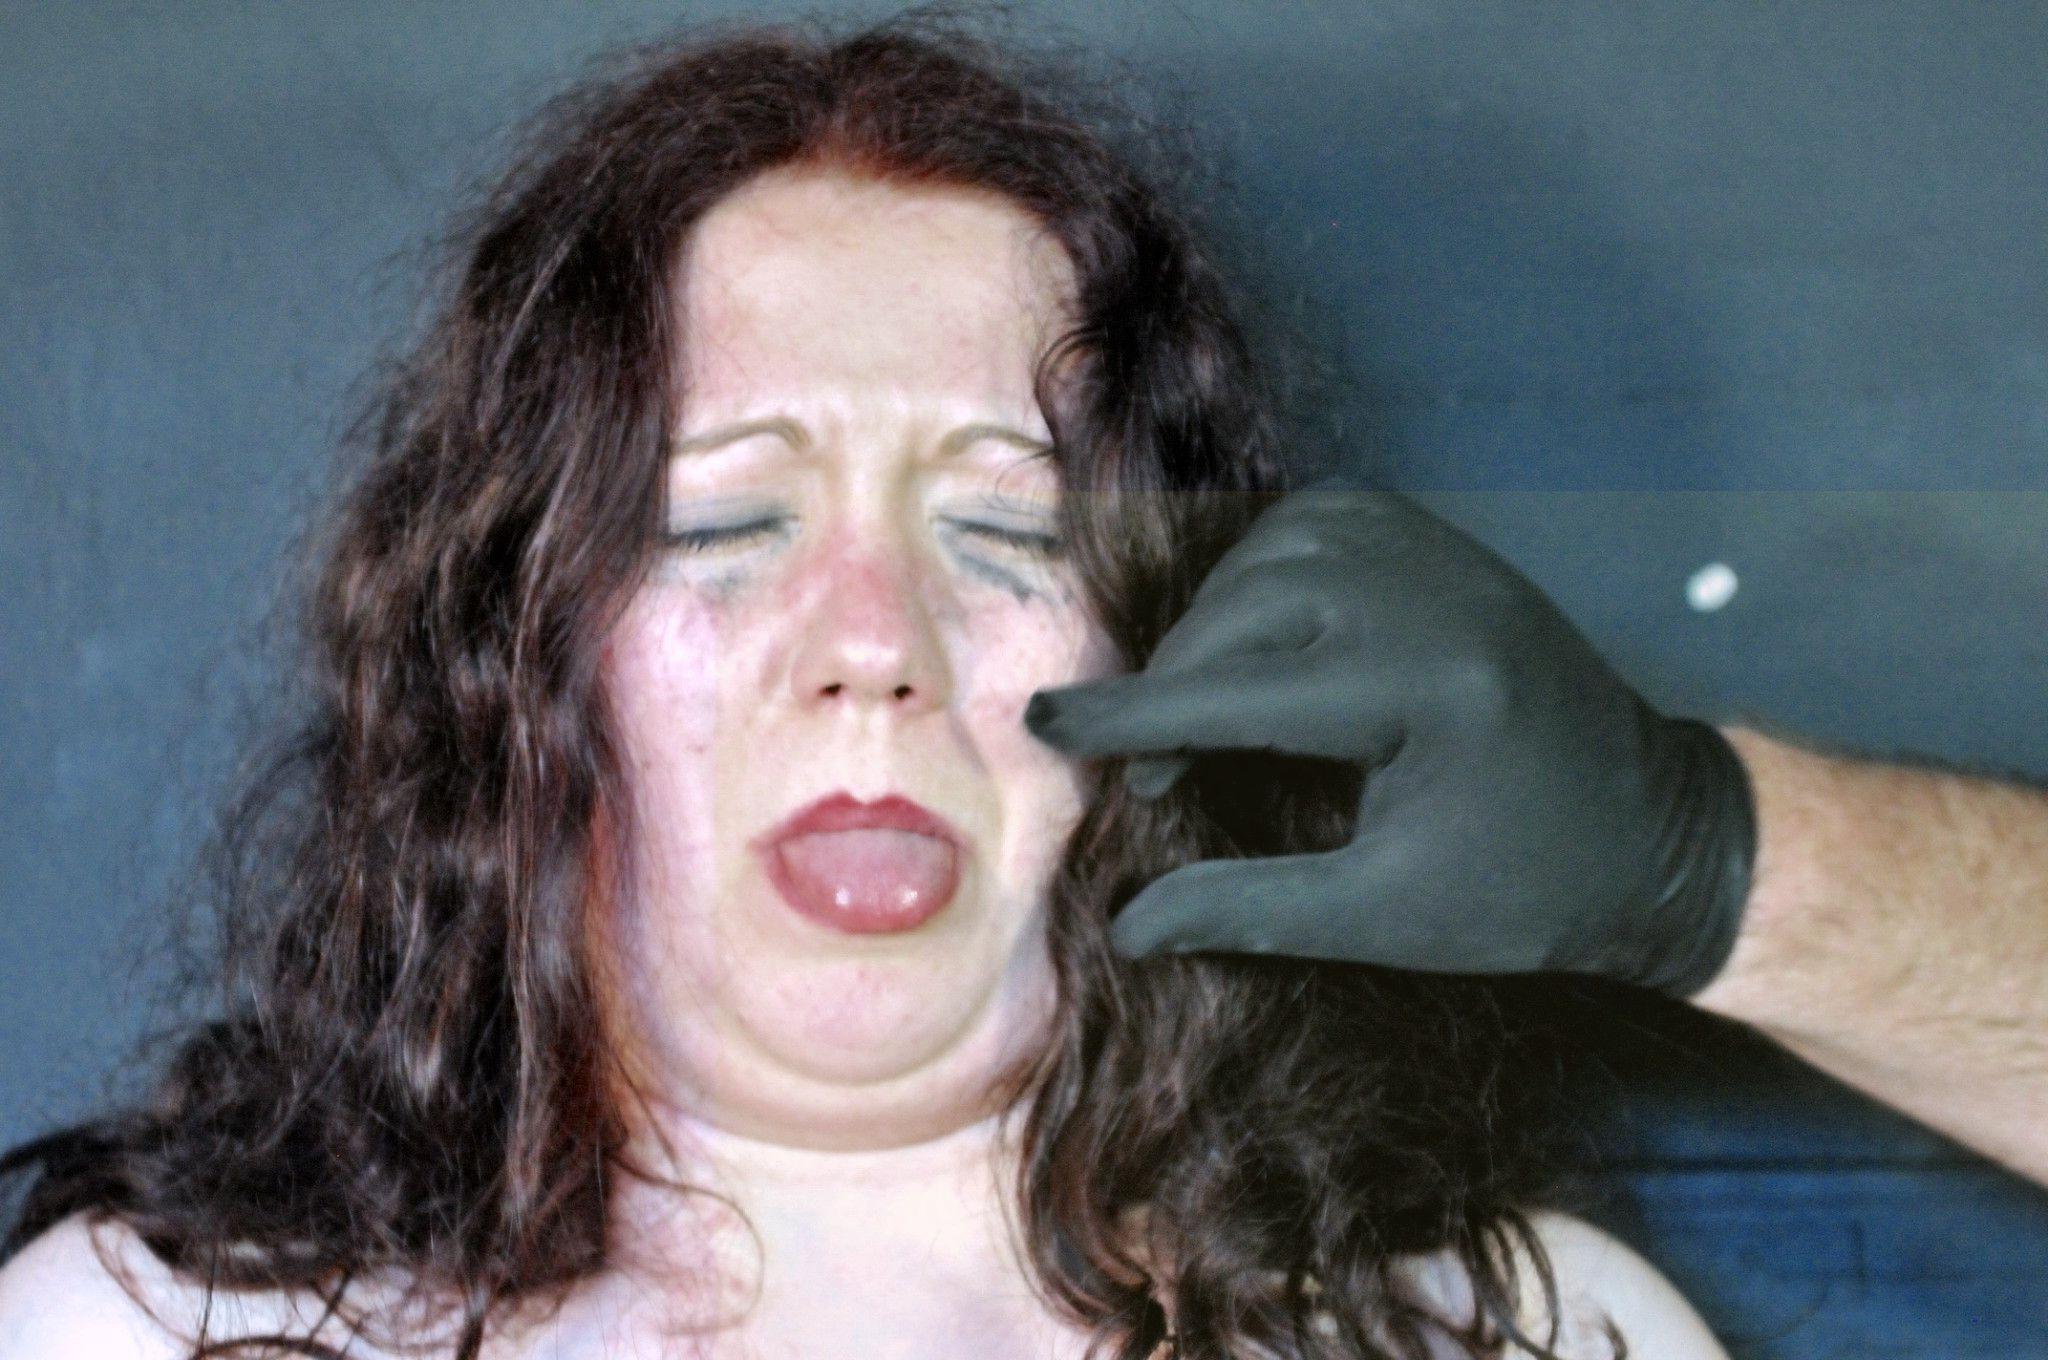 BBW slut Roseanne faces intense needle torture in punishment for destroyed tits Photo